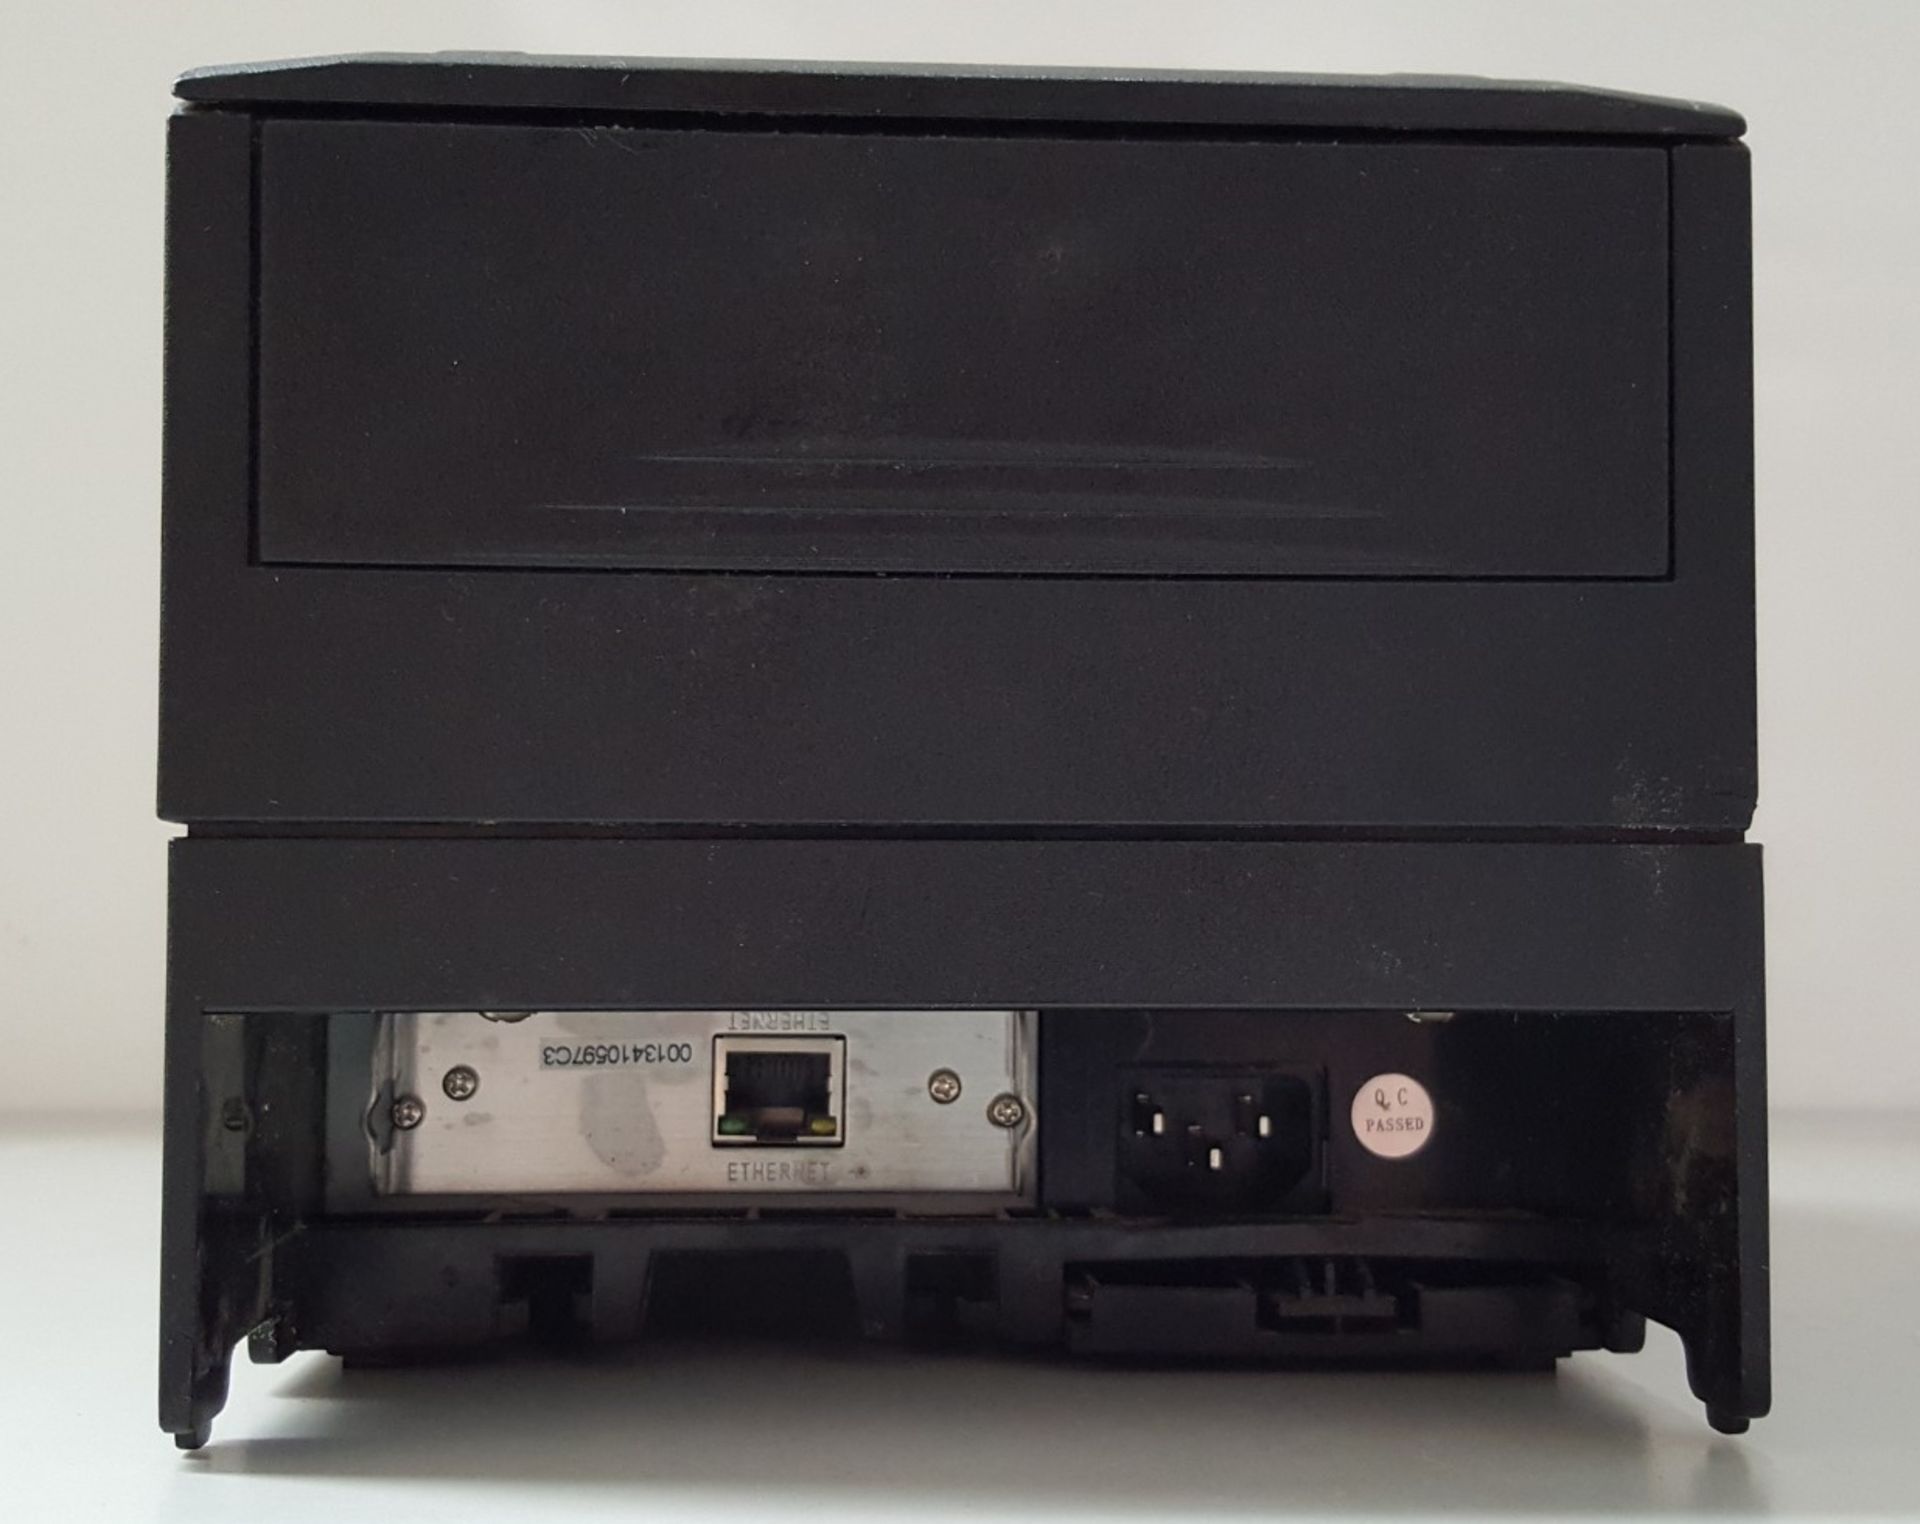 1 x SNBC Ethernet/USB Receipt Printer BTP-M300 Black - Ref BY114 AC3 - Image 4 of 5